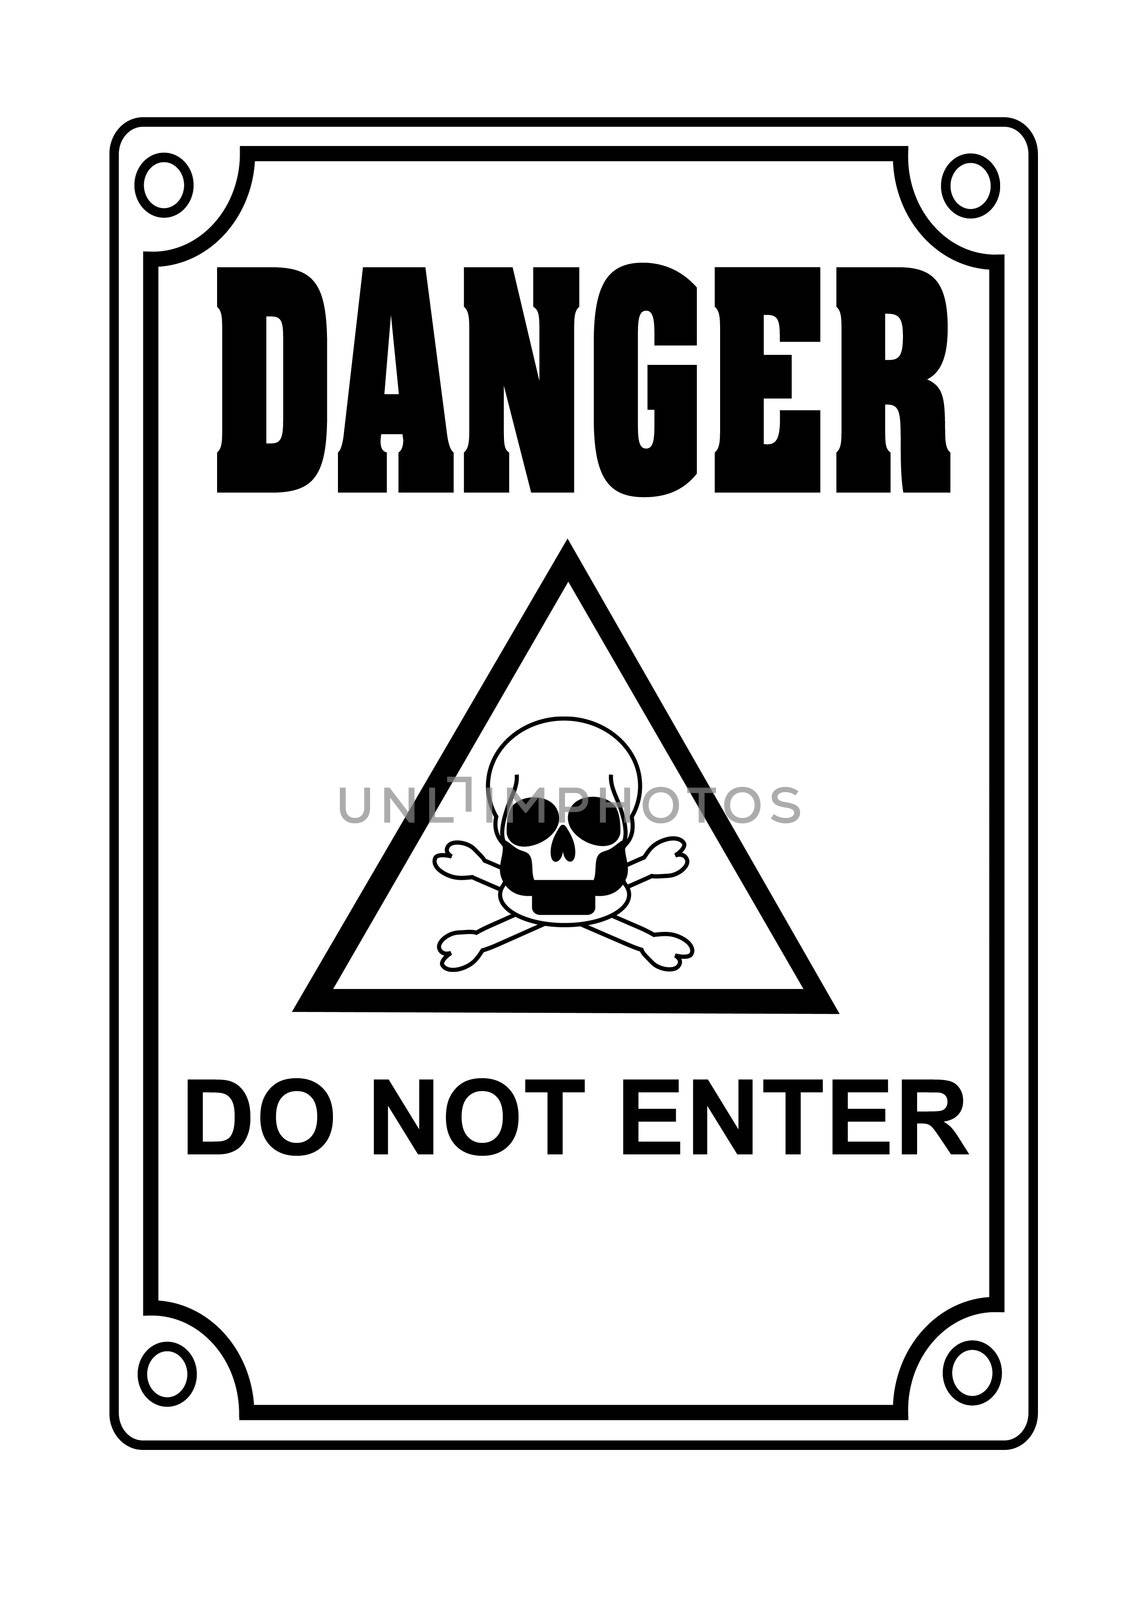 Danger symbol